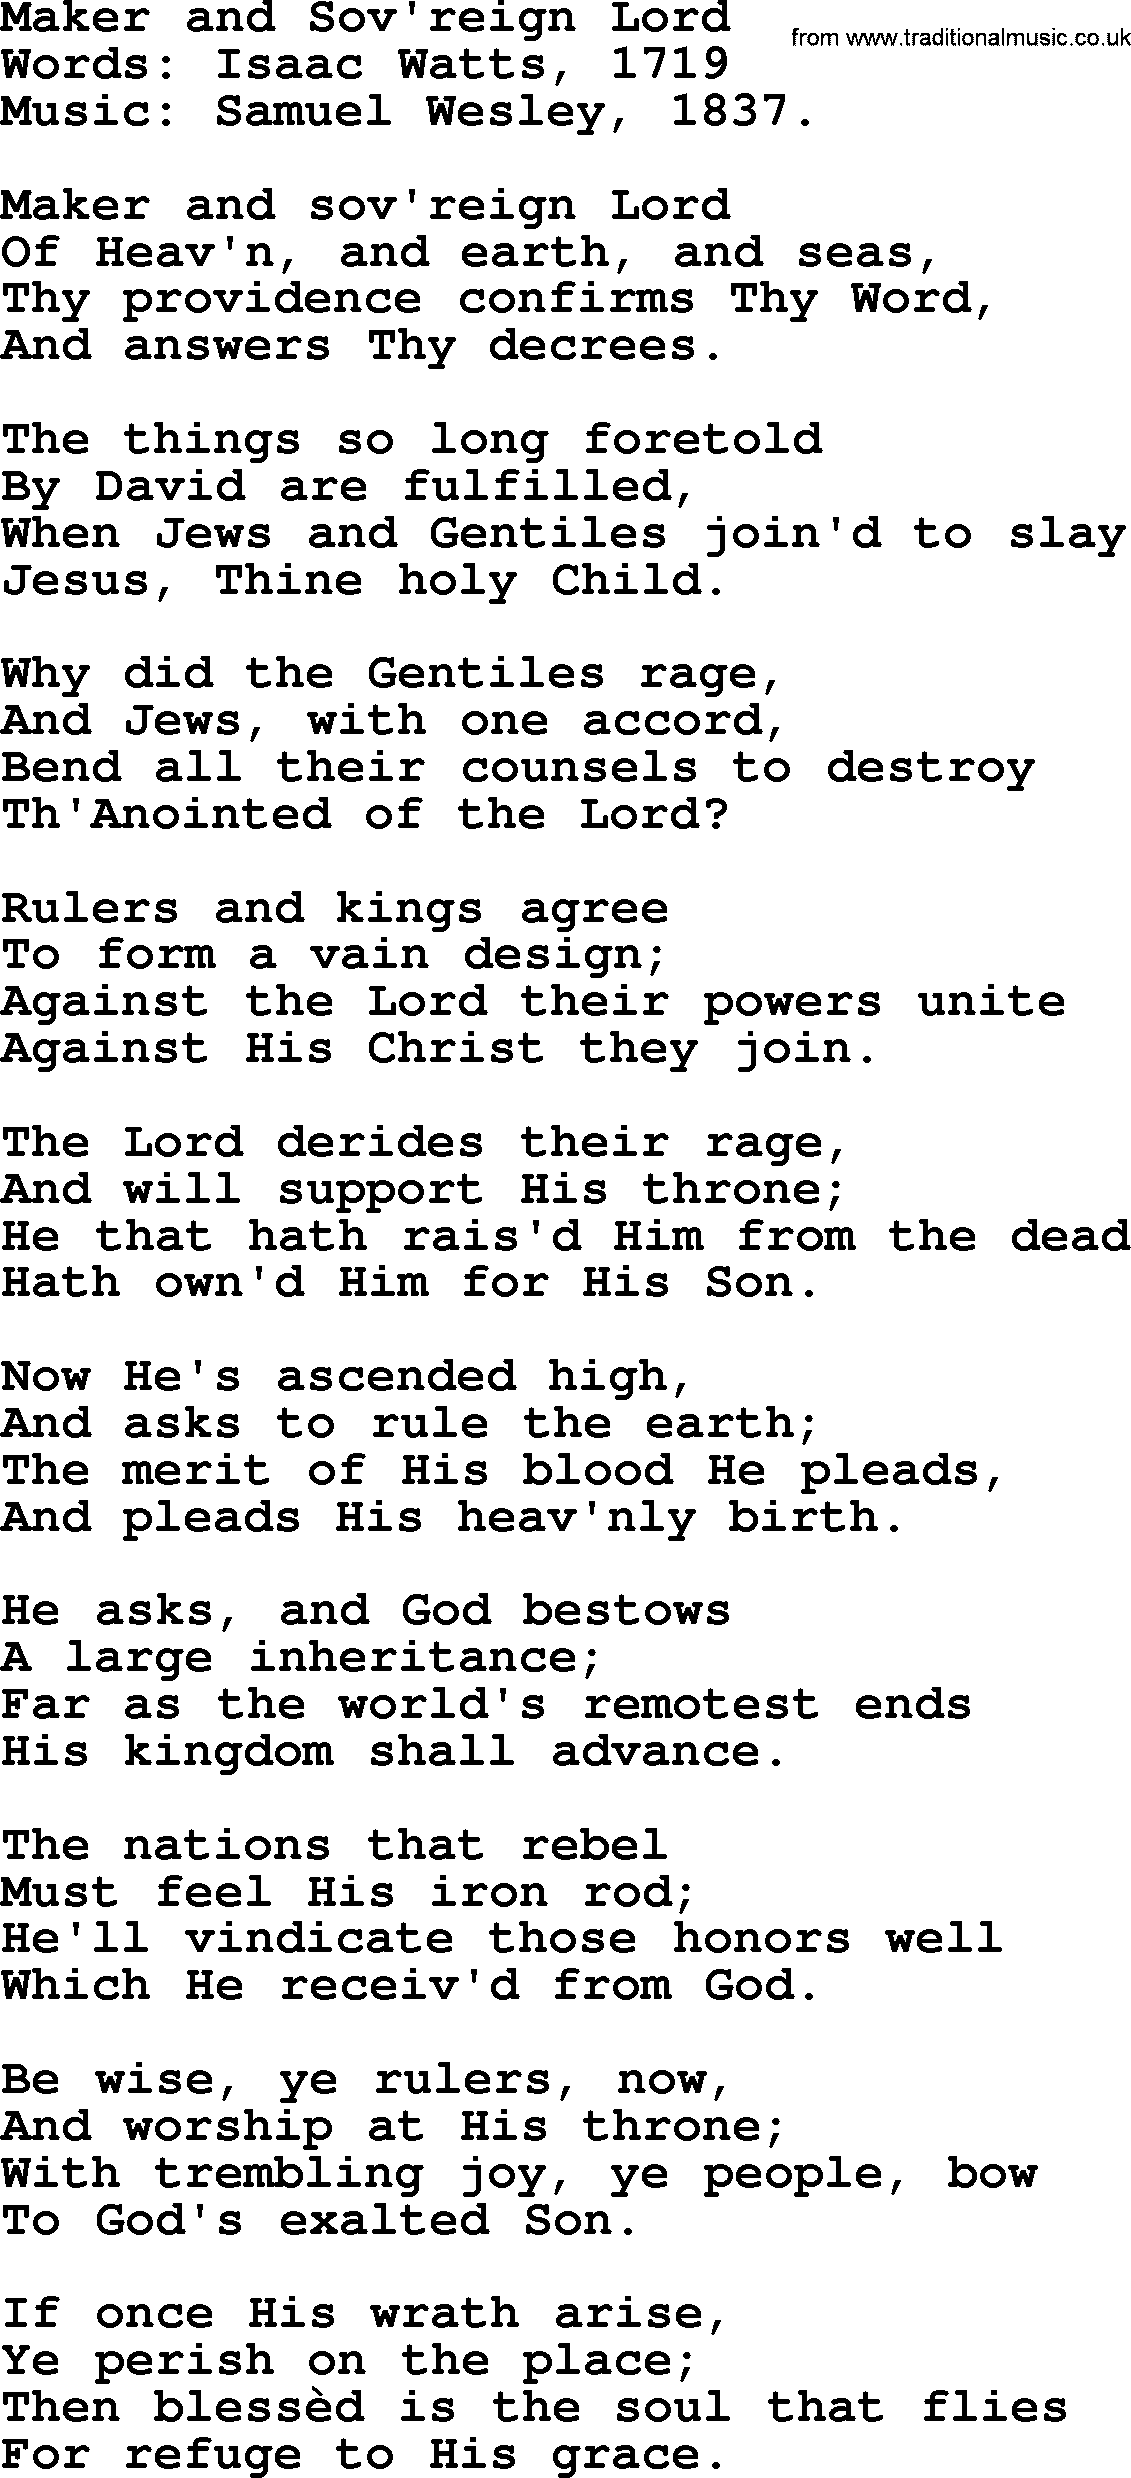 Isaac Watts Christian hymn: Maker and Sov'reign Lord- lyricss